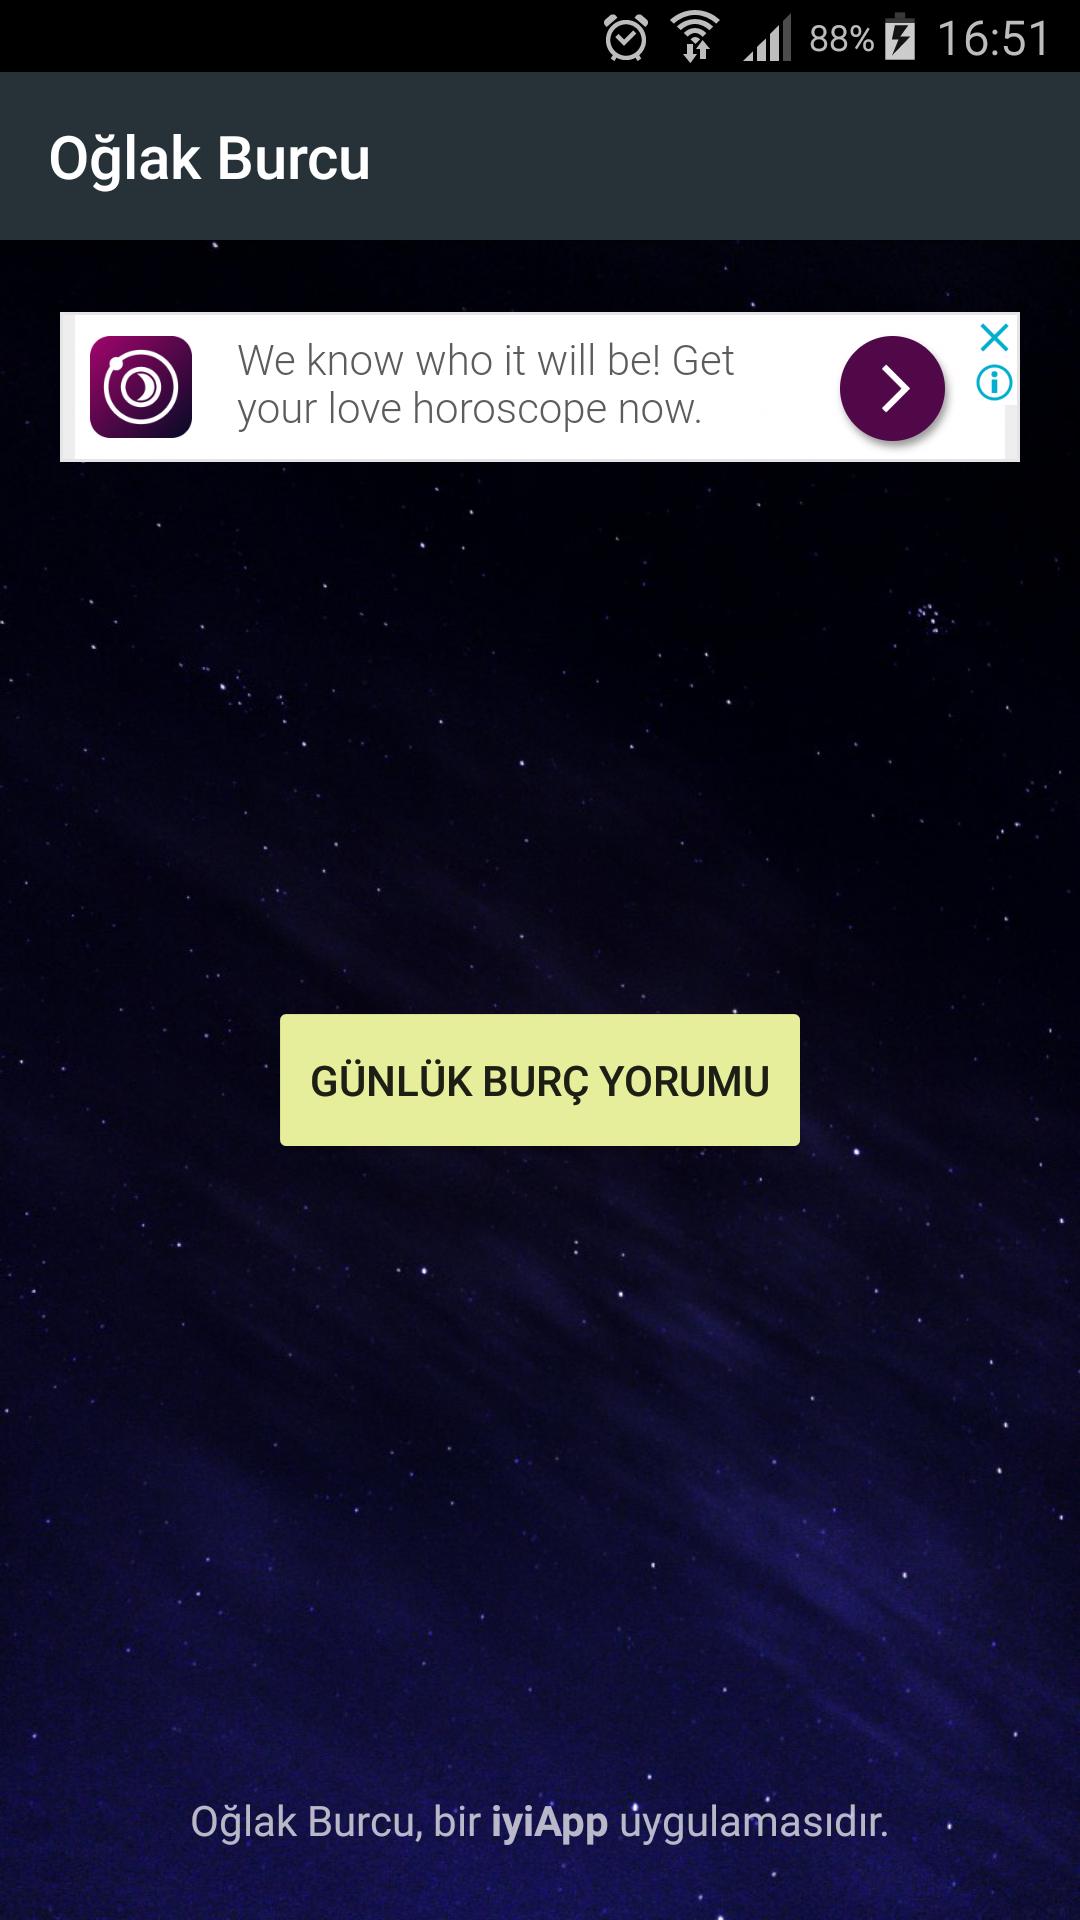 Oğlak Burcu for Android - APK Download